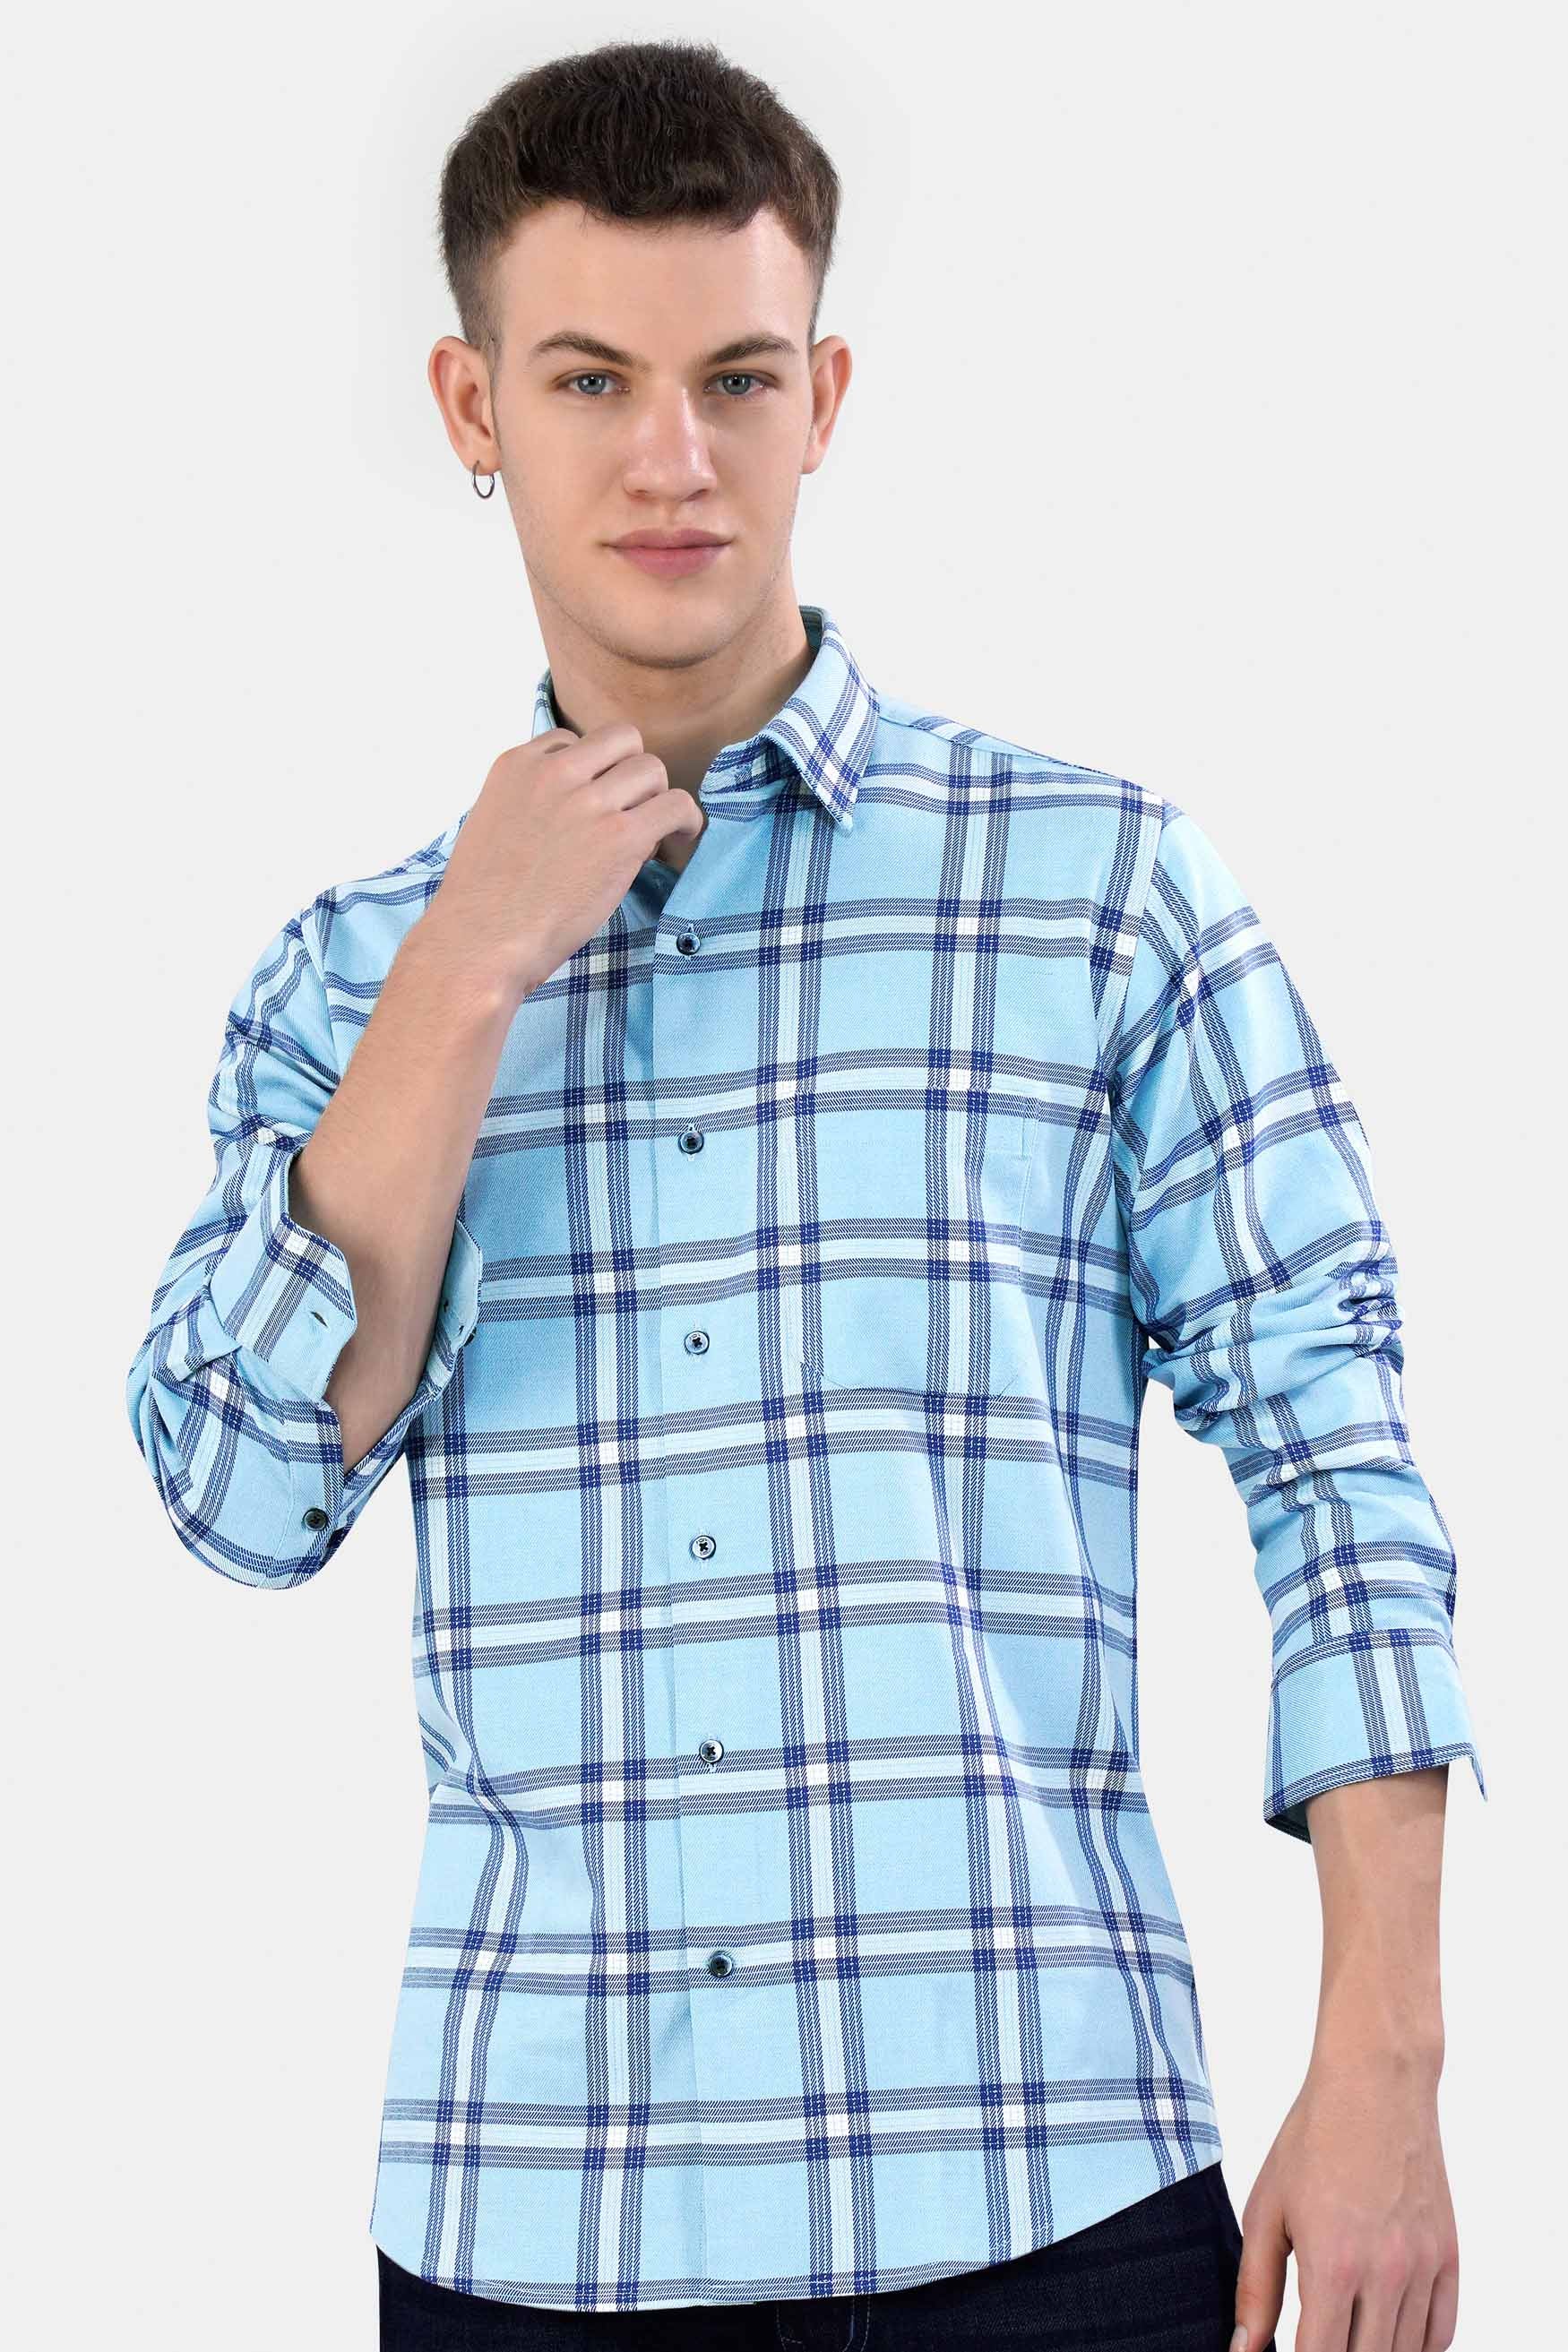 Carolina Blue Twill Plaid Premium Cotton Shirt